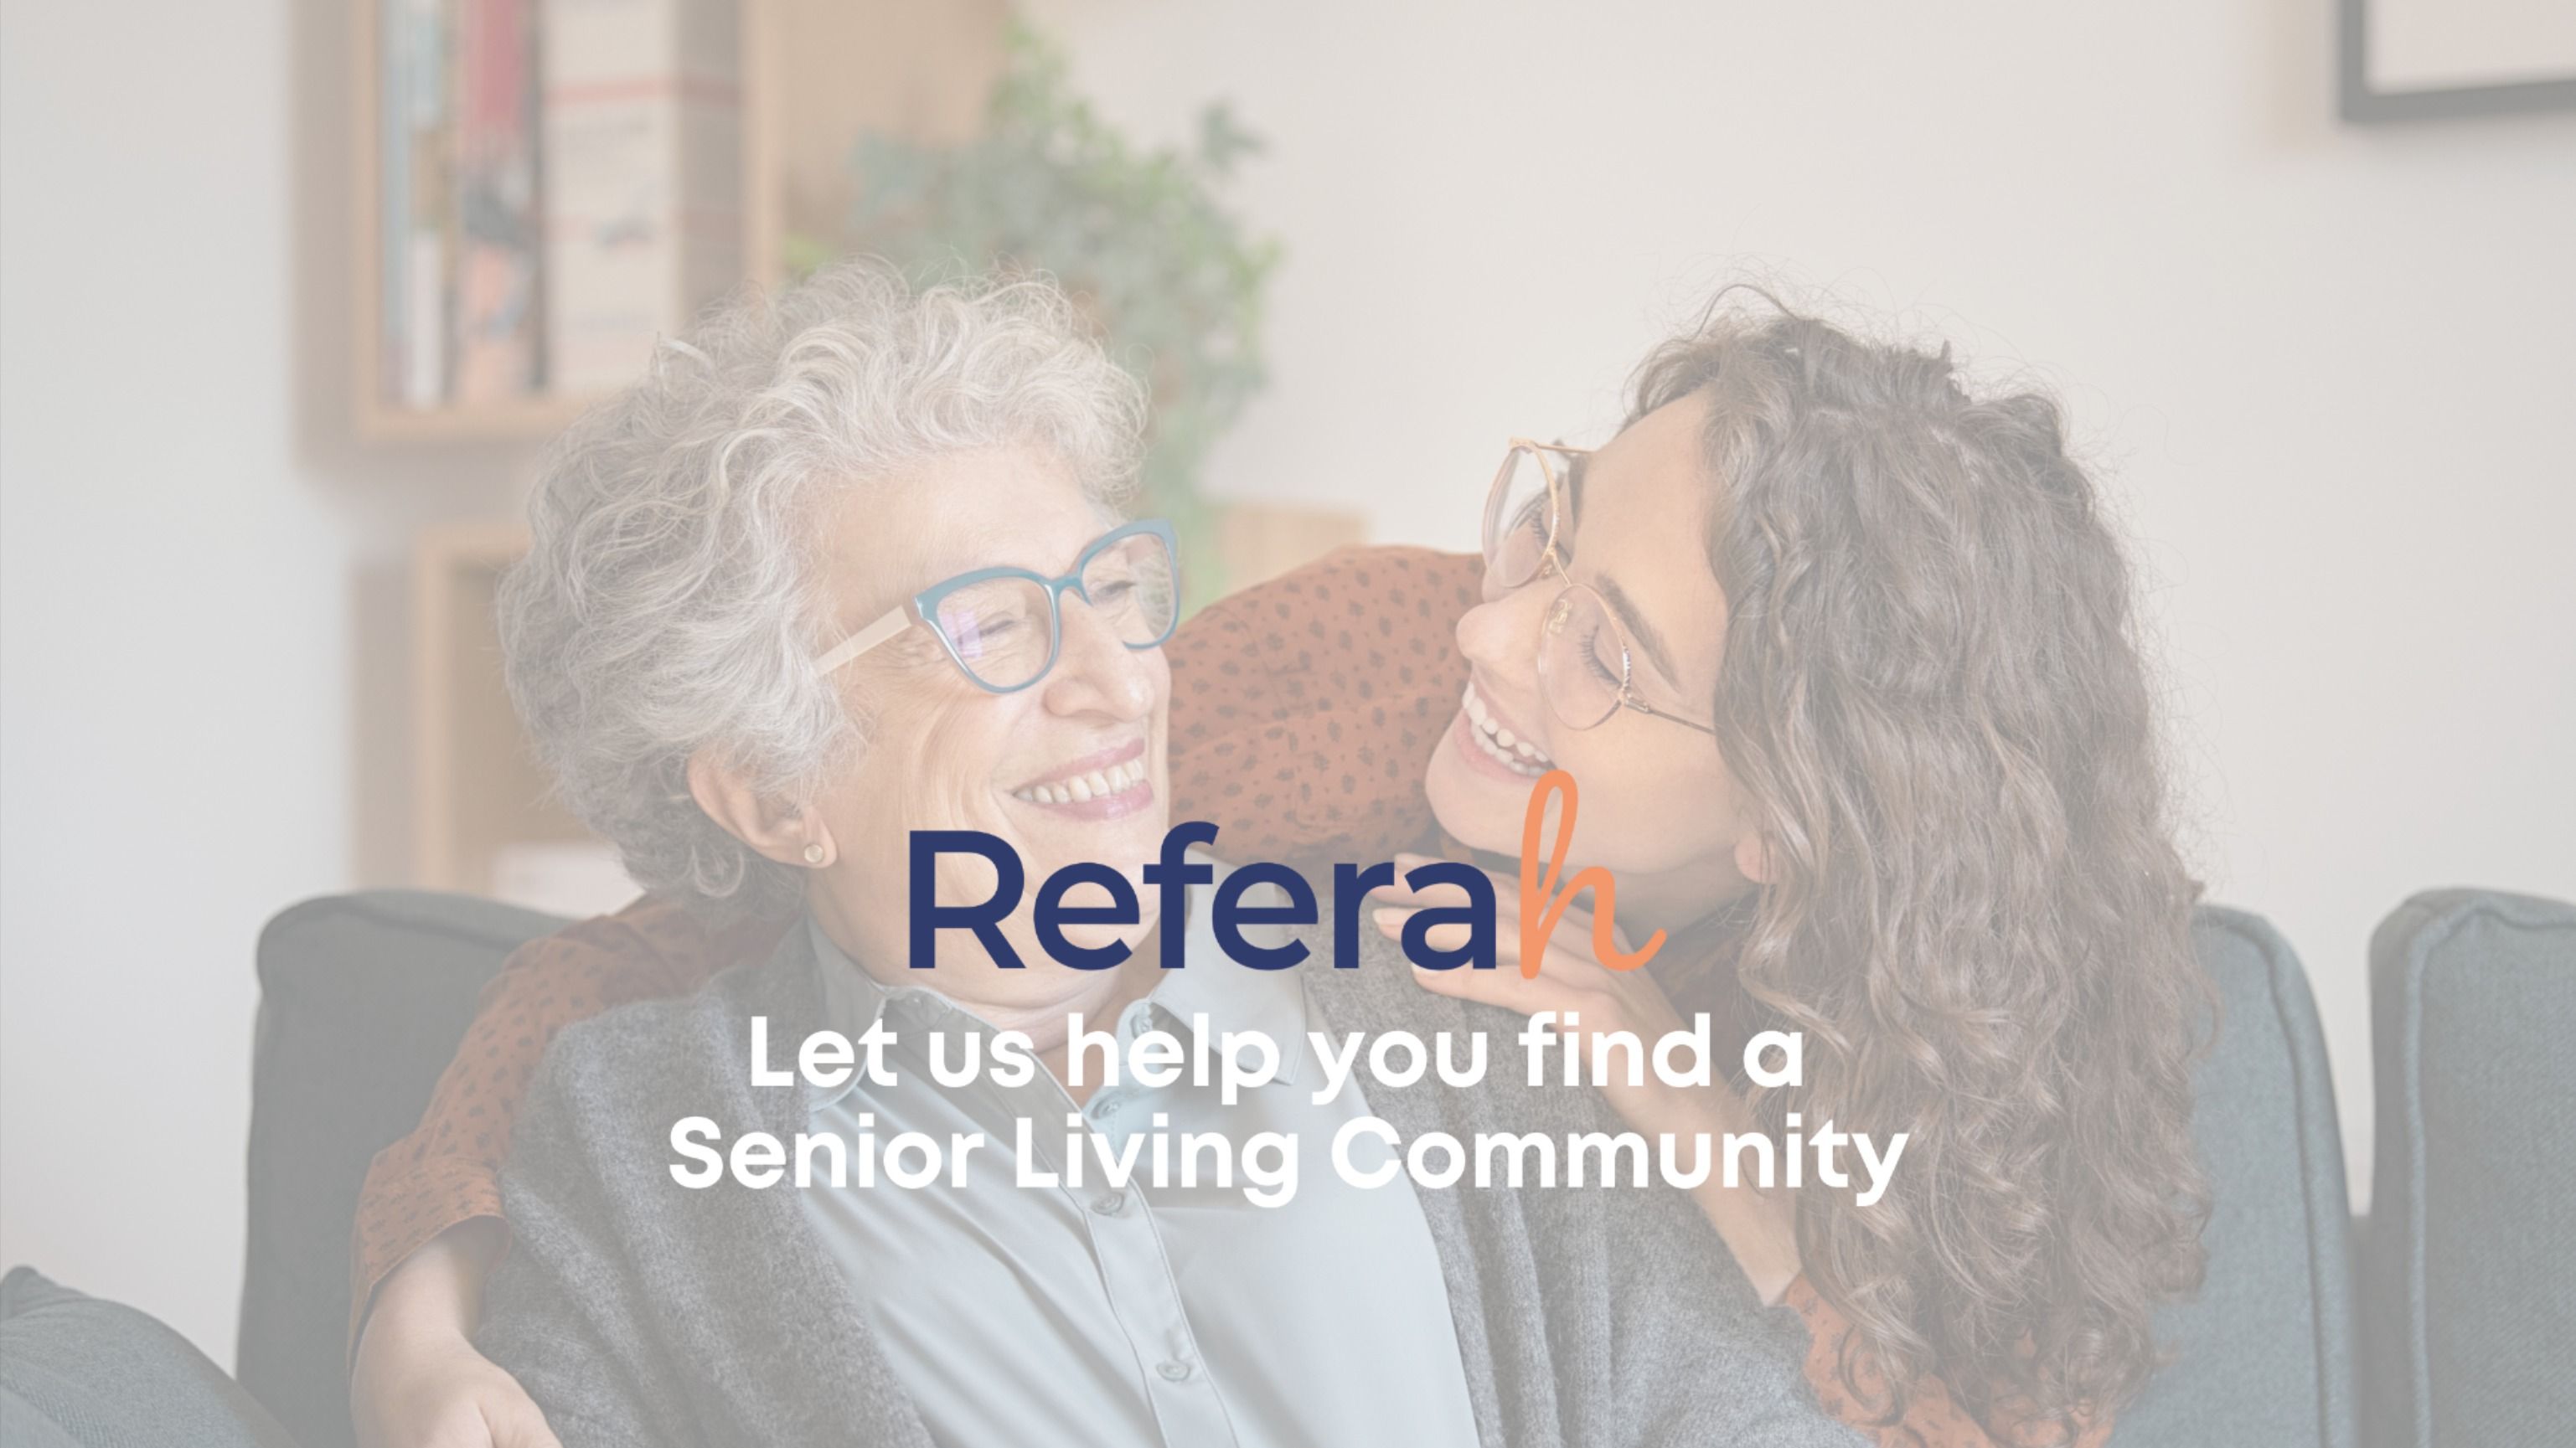 Referah Senior Living Communities